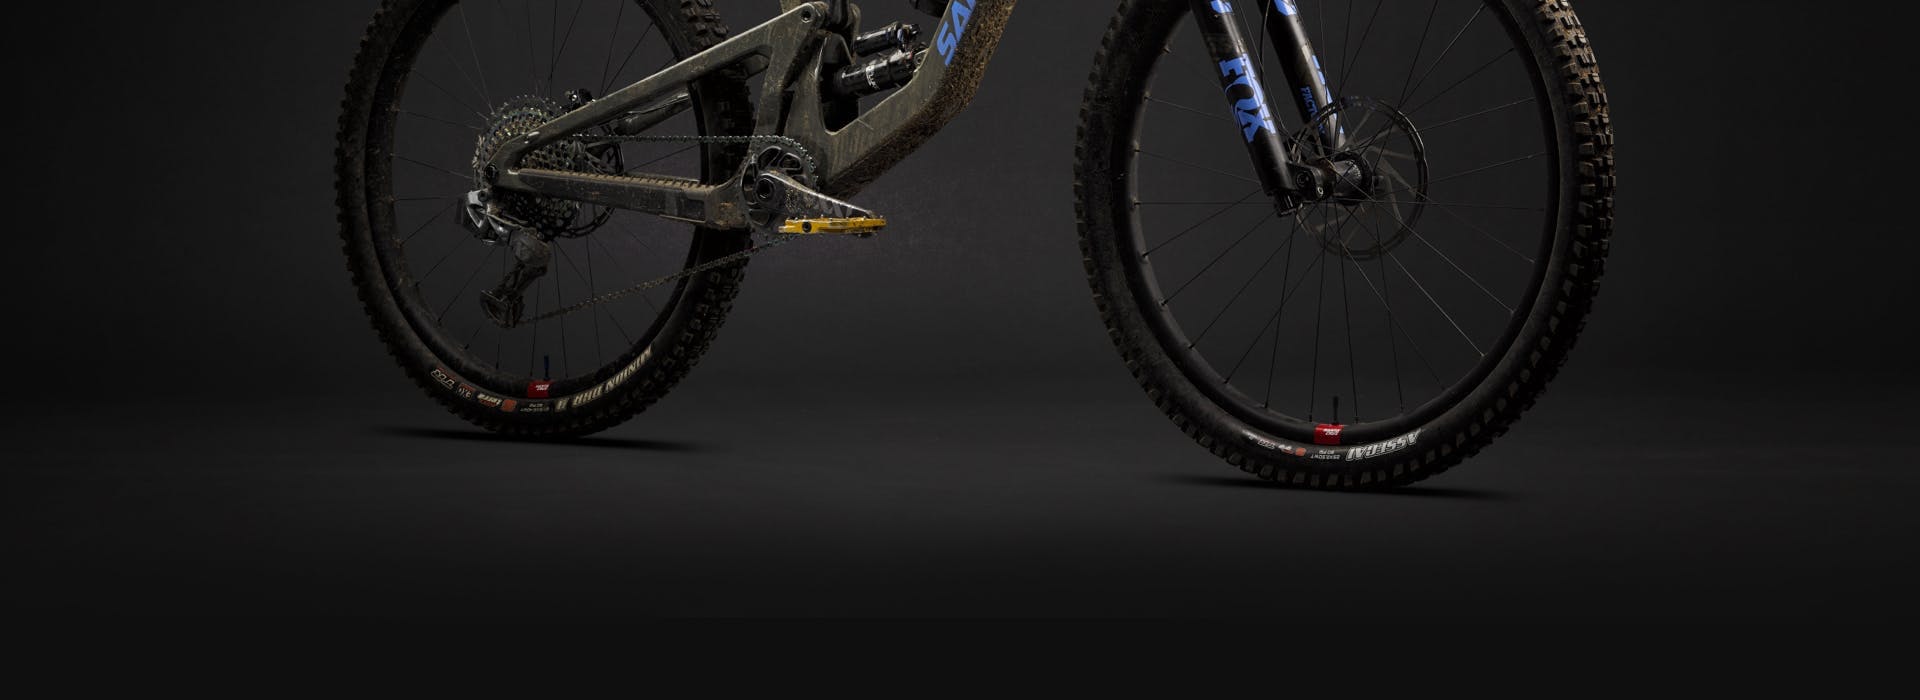 The bottom half of a Santa Cruz Bronson 4 mixed wheel full suspension mountain bike covered in dirt